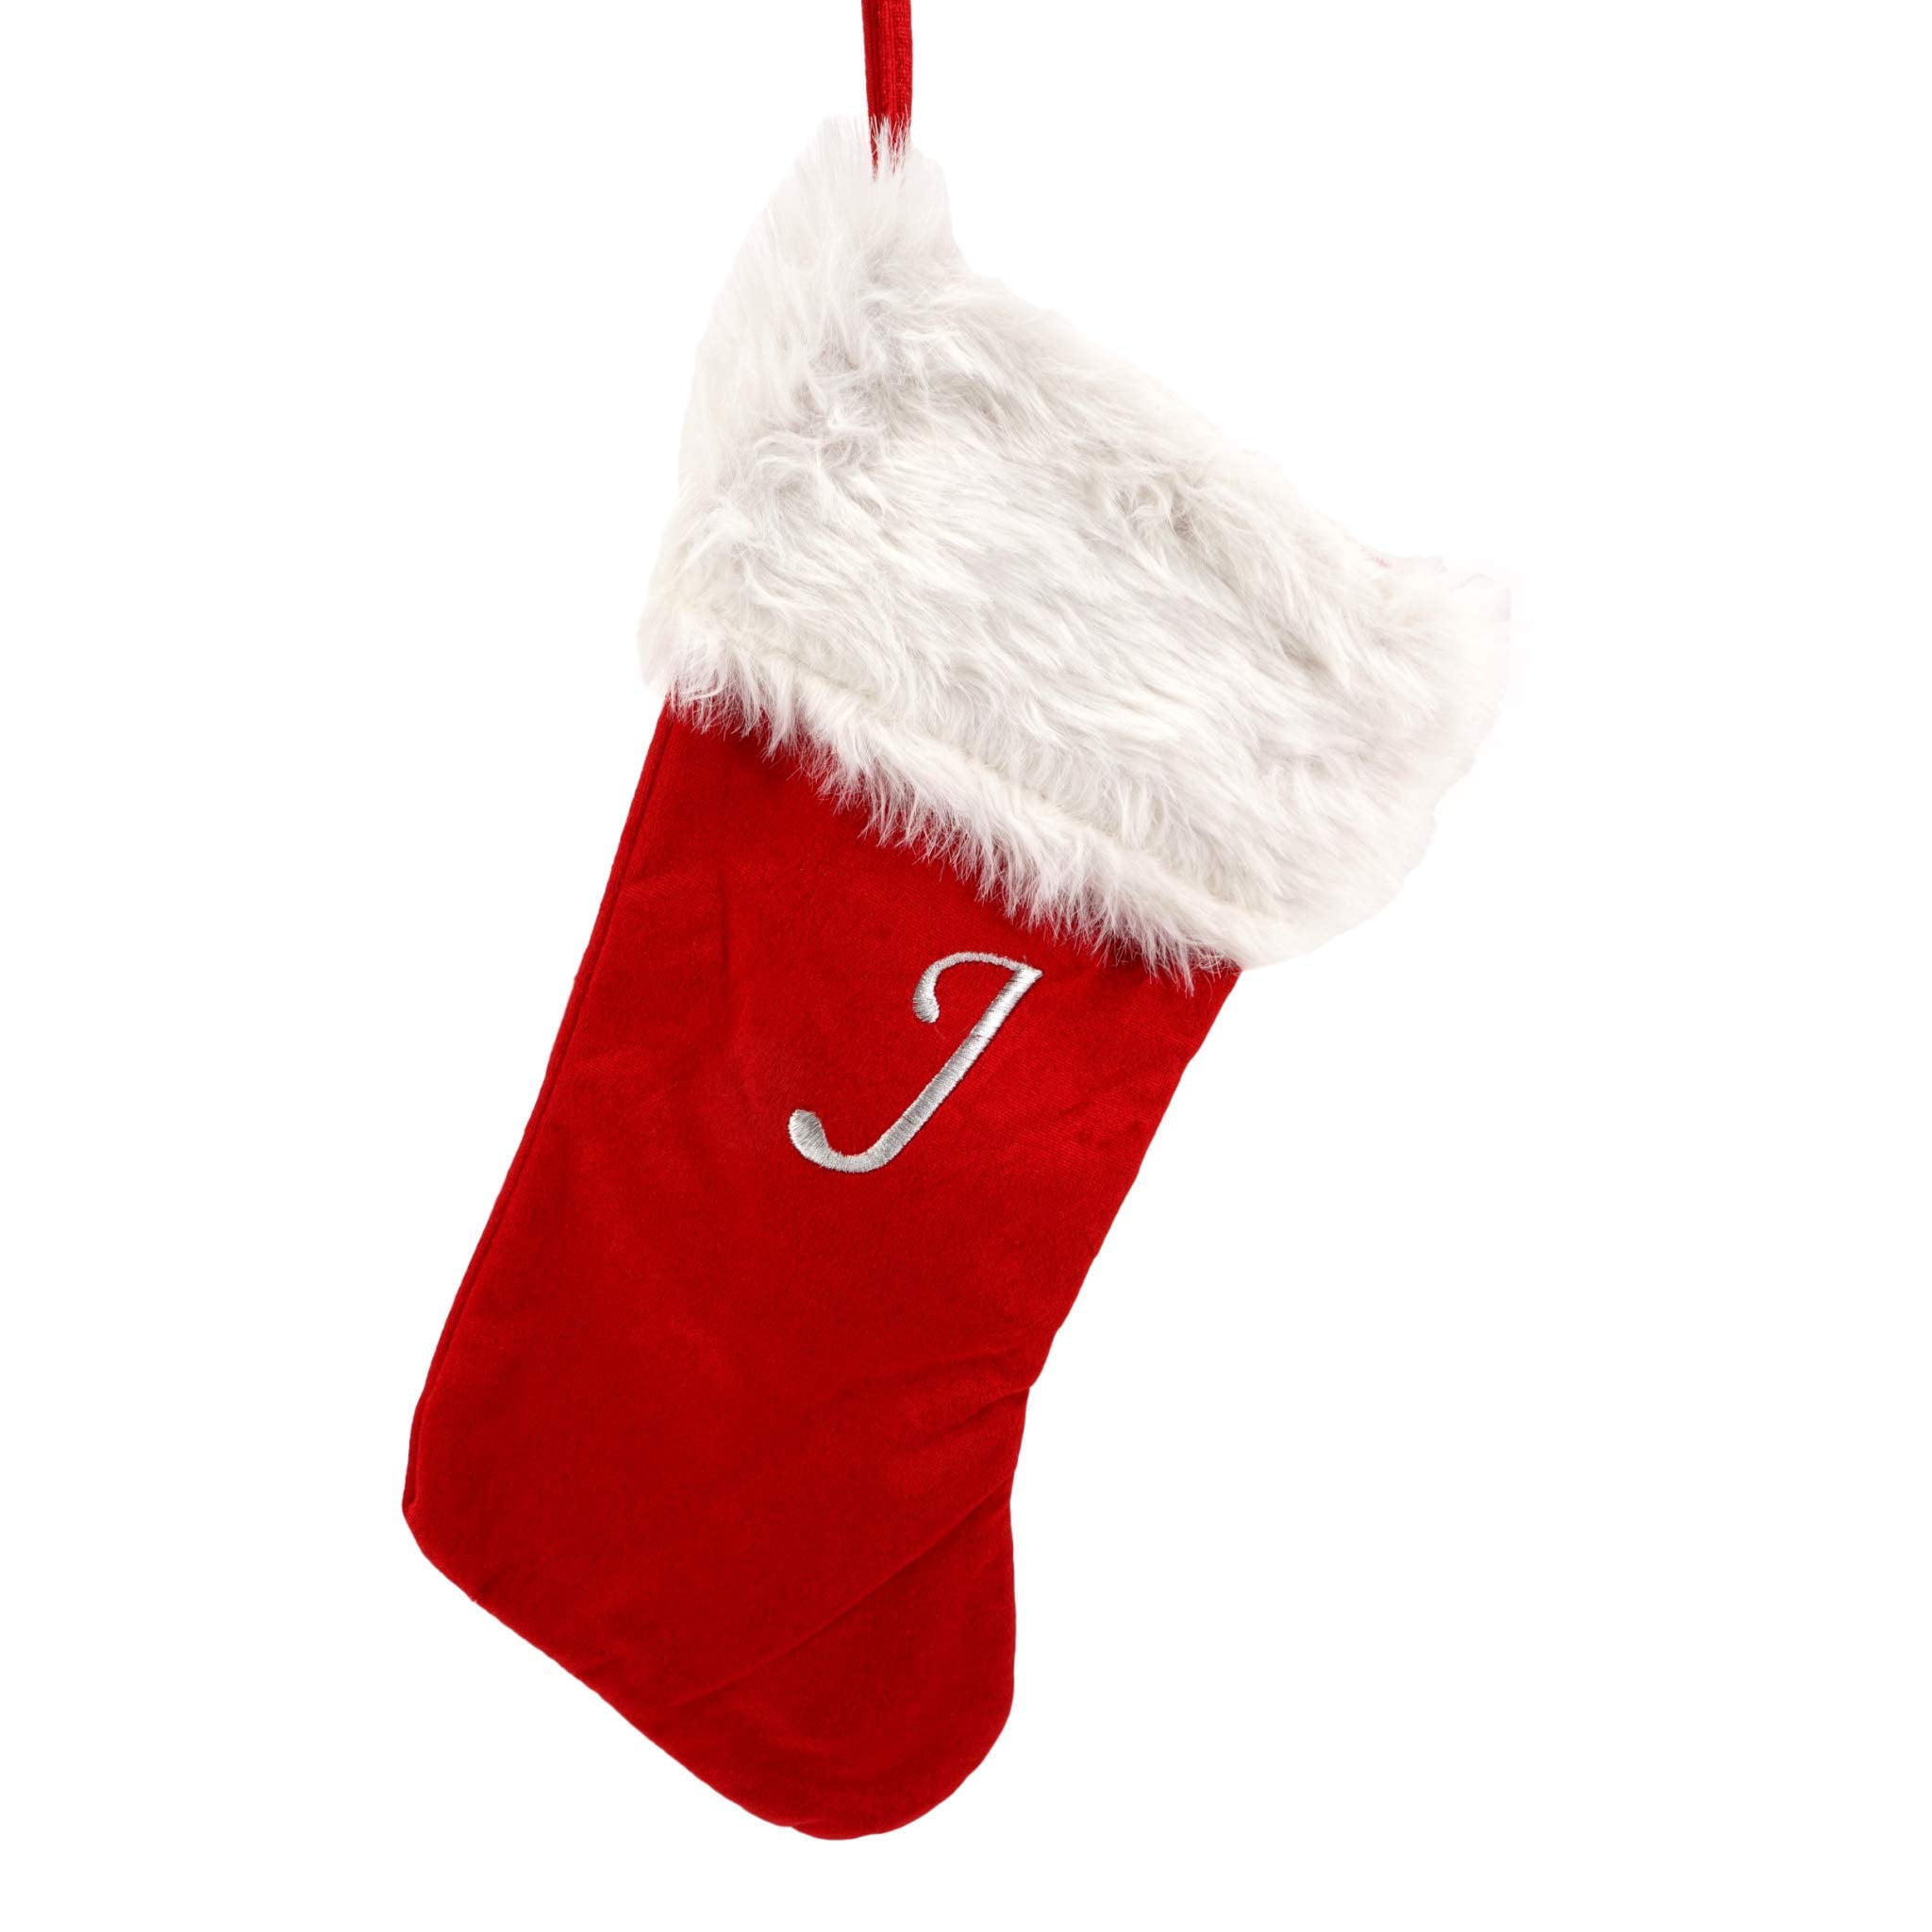 Xmas Gift Sack Bag Large Red And White 'Letter To Santa' Christmas Stocking